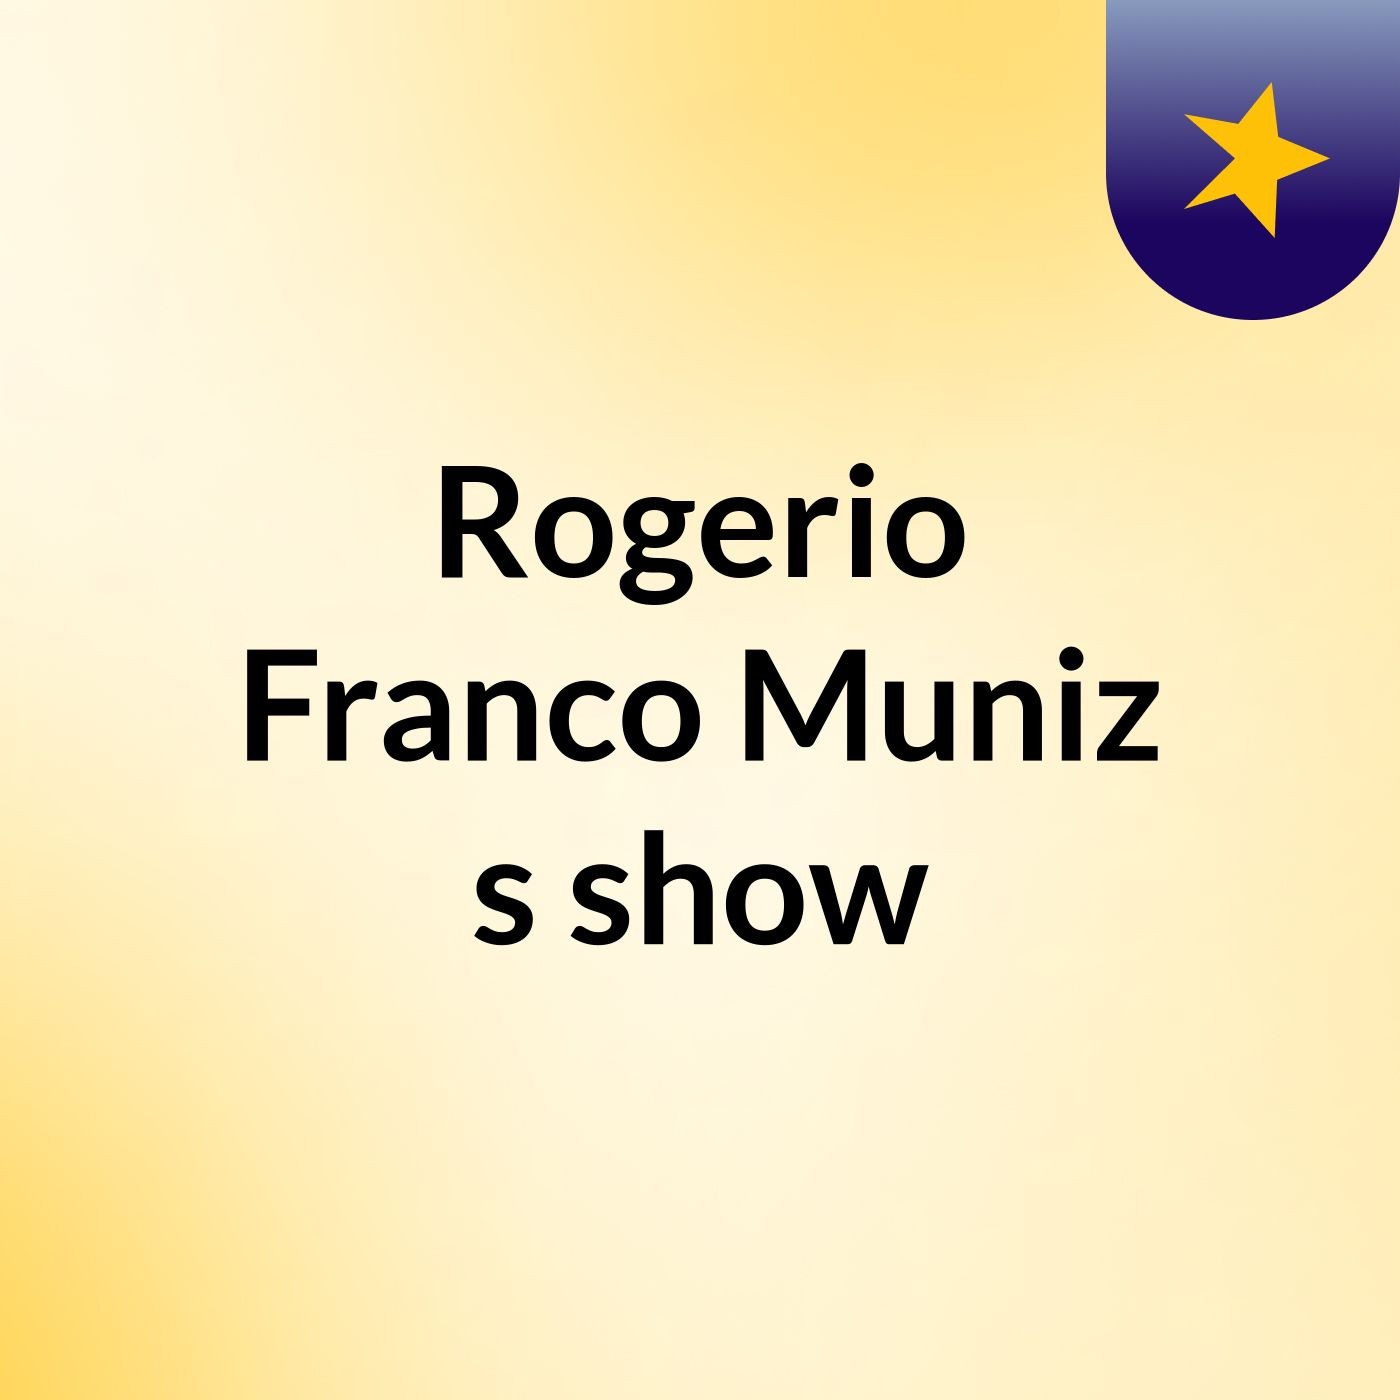 Rogerio Franco Muniz's show